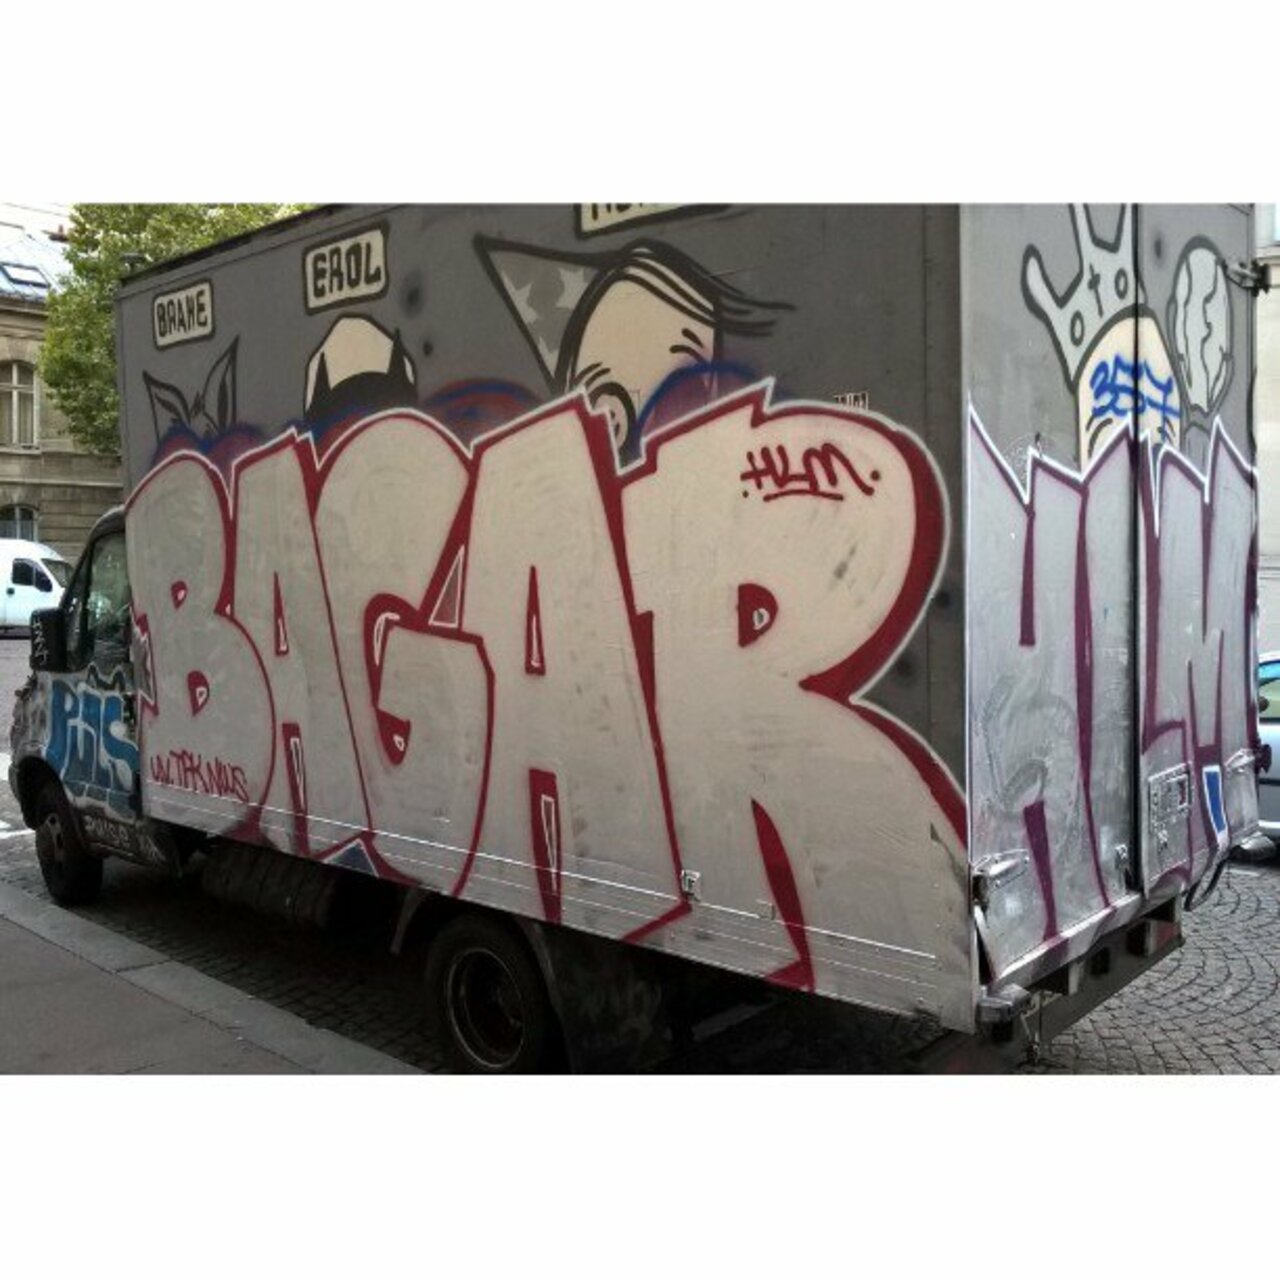 circumjacent_fr: #Paris #graffiti photo by maxdimontemarciano http://ift.tt/1M4jgAQ #StreetArt https://t.co/PgmdwOvT1t